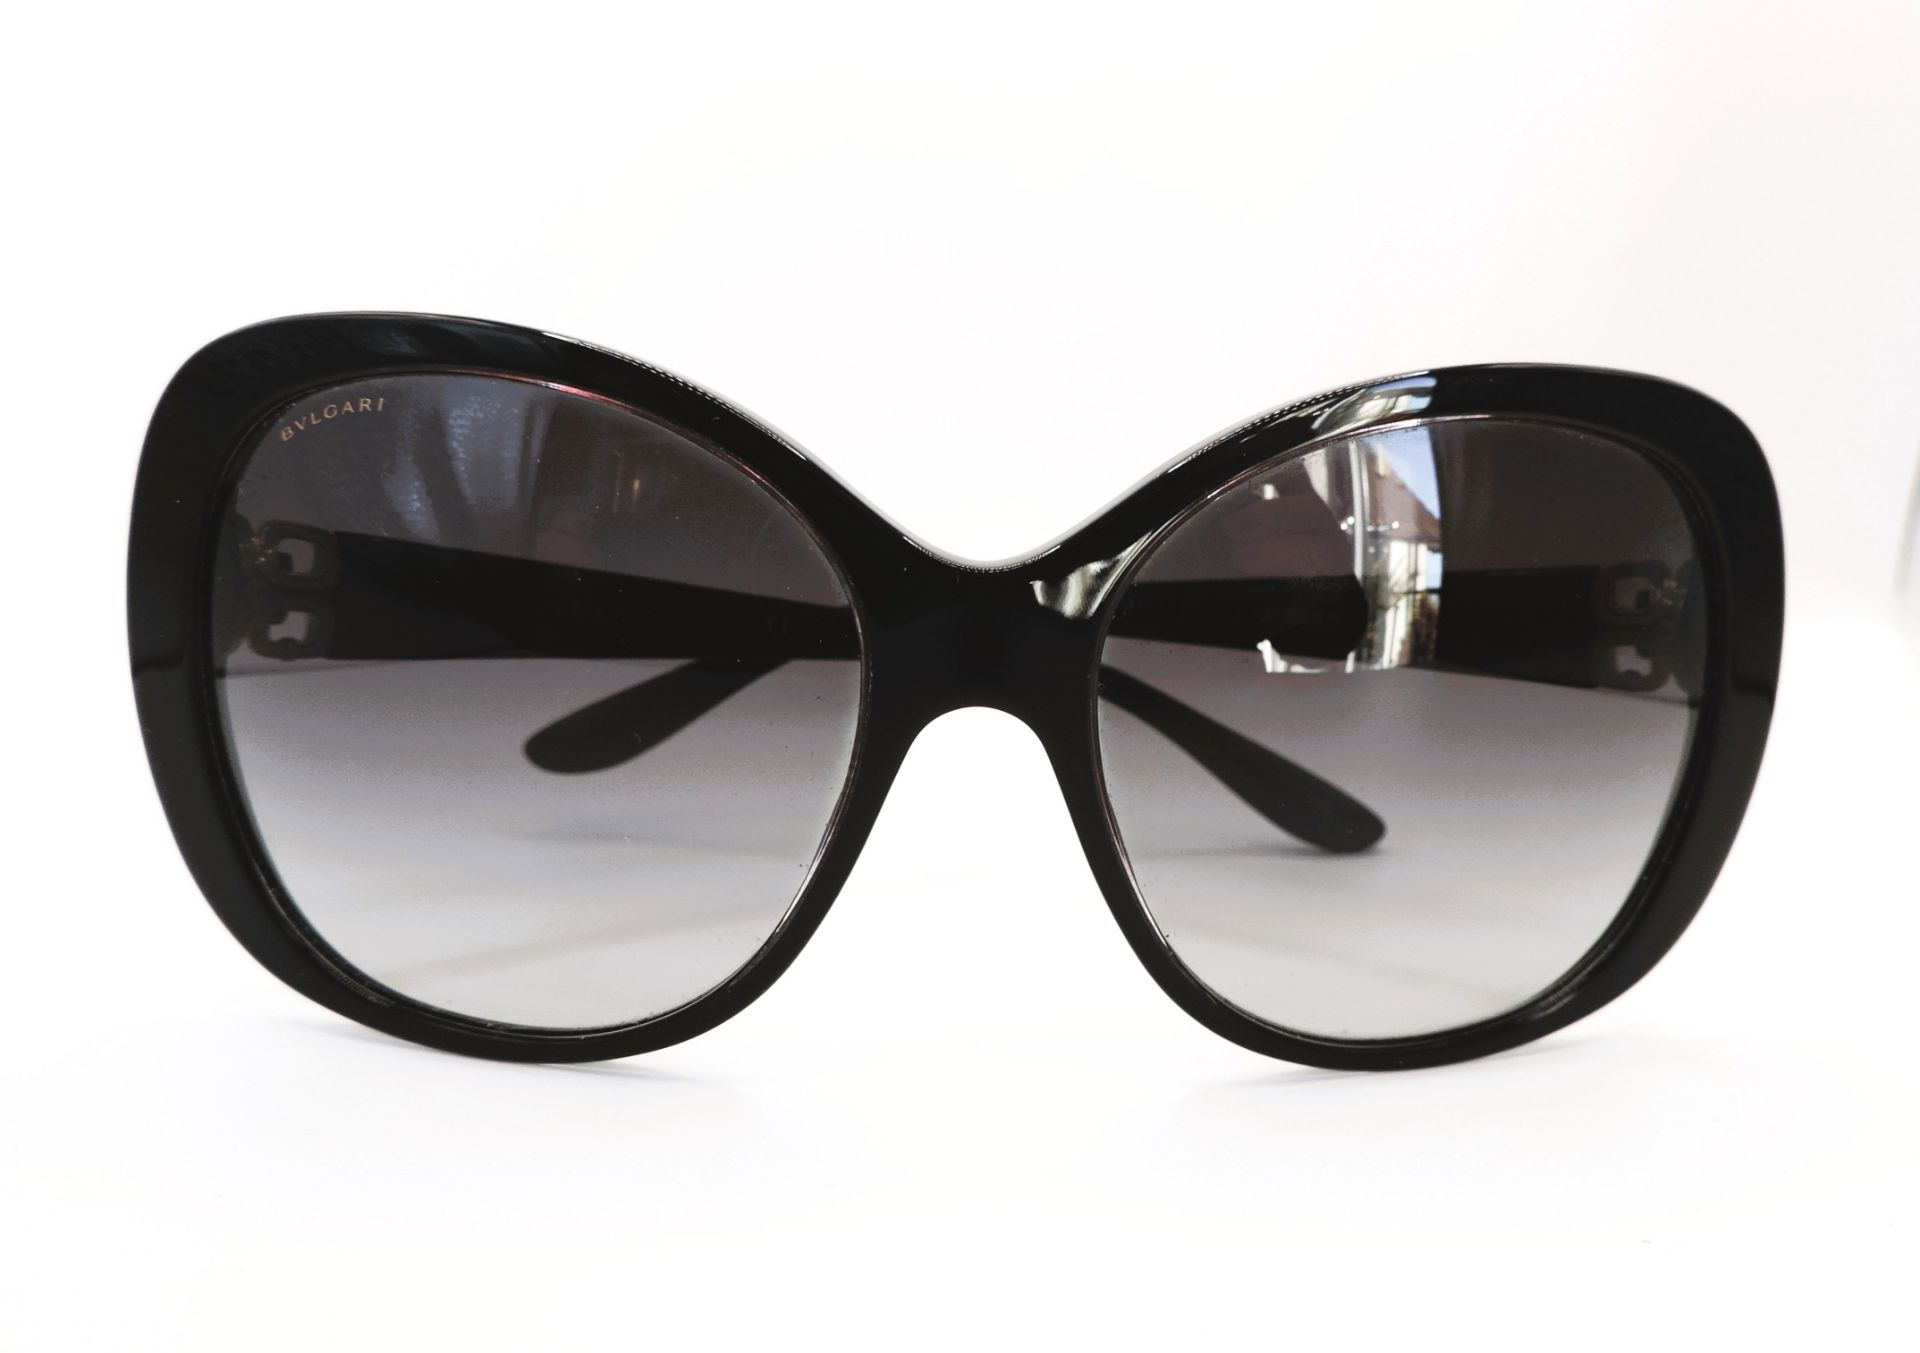 BVLGARI Black Sunglasses 8171-C Jewelled Hinged Detail New With Box & Certificate - Image 6 of 17